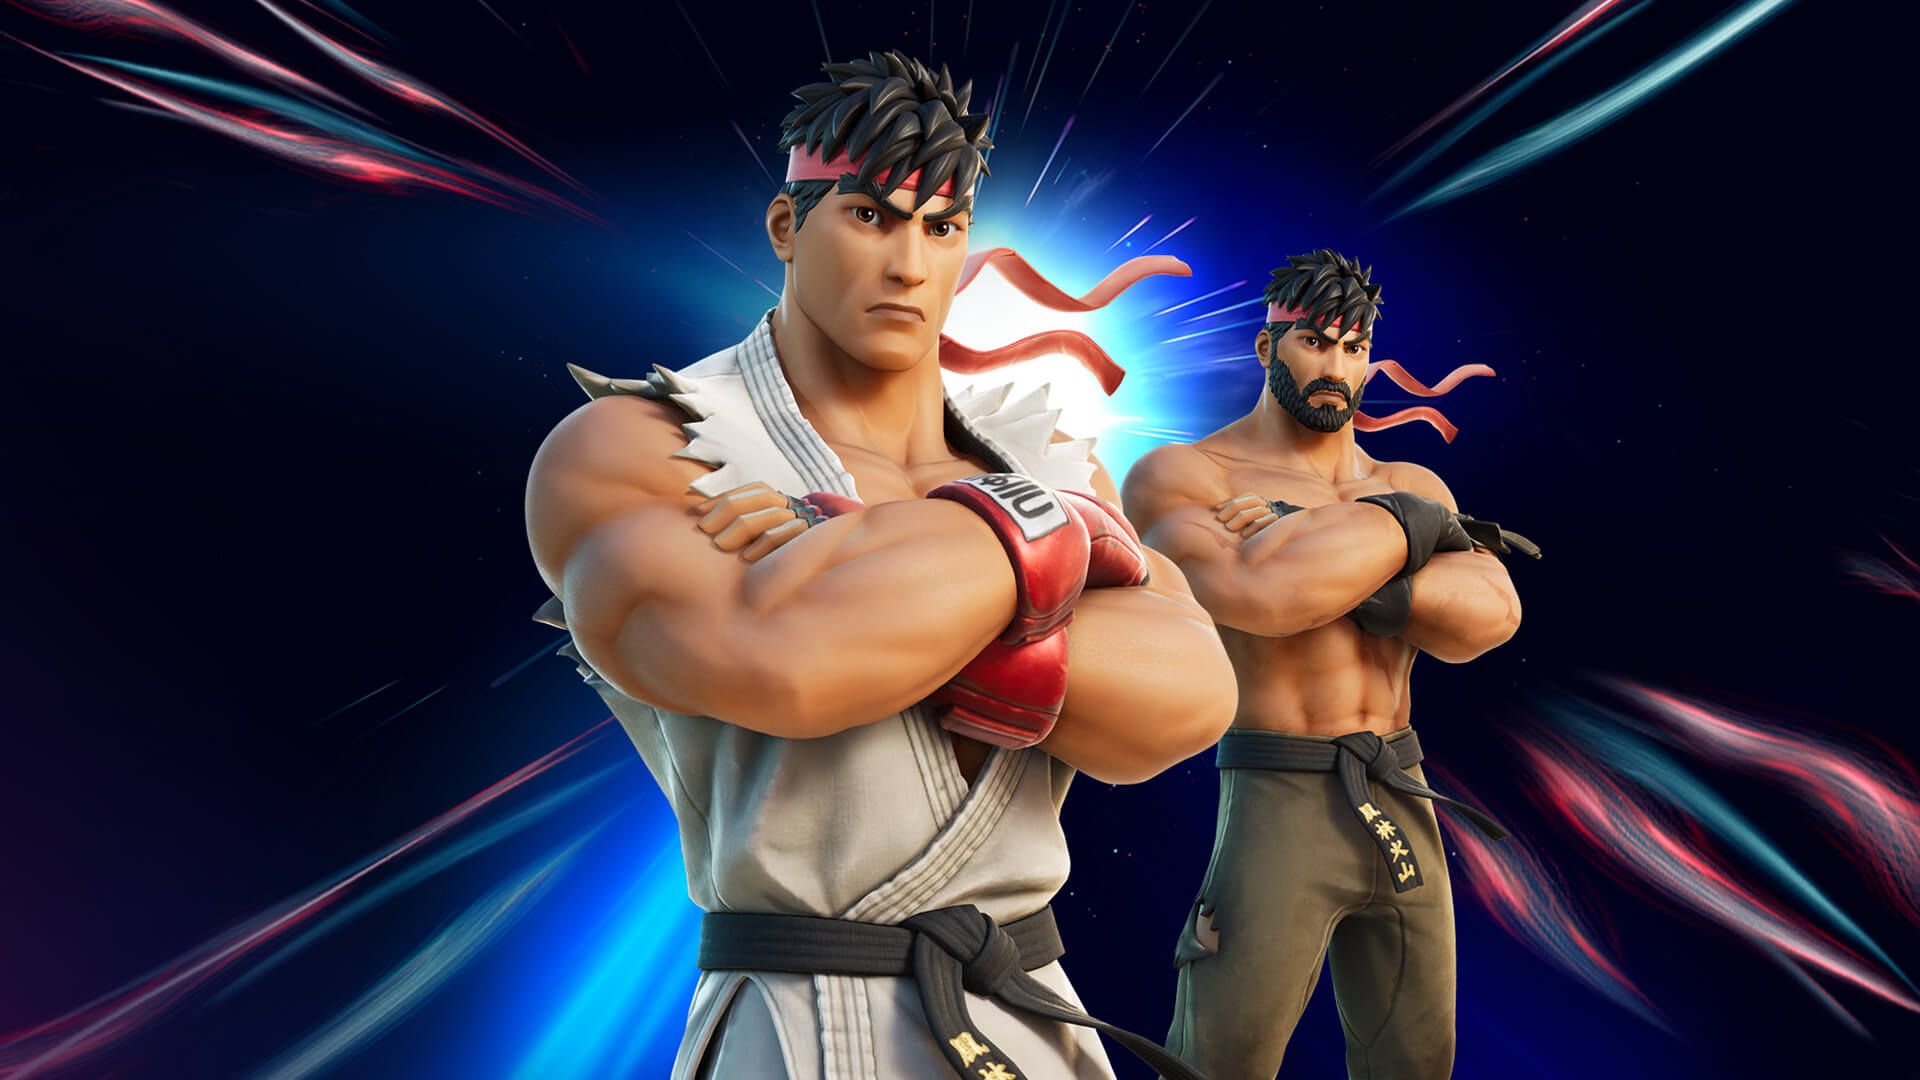 Street Fighter's Ryu And Chun Li Square .epicgames.com